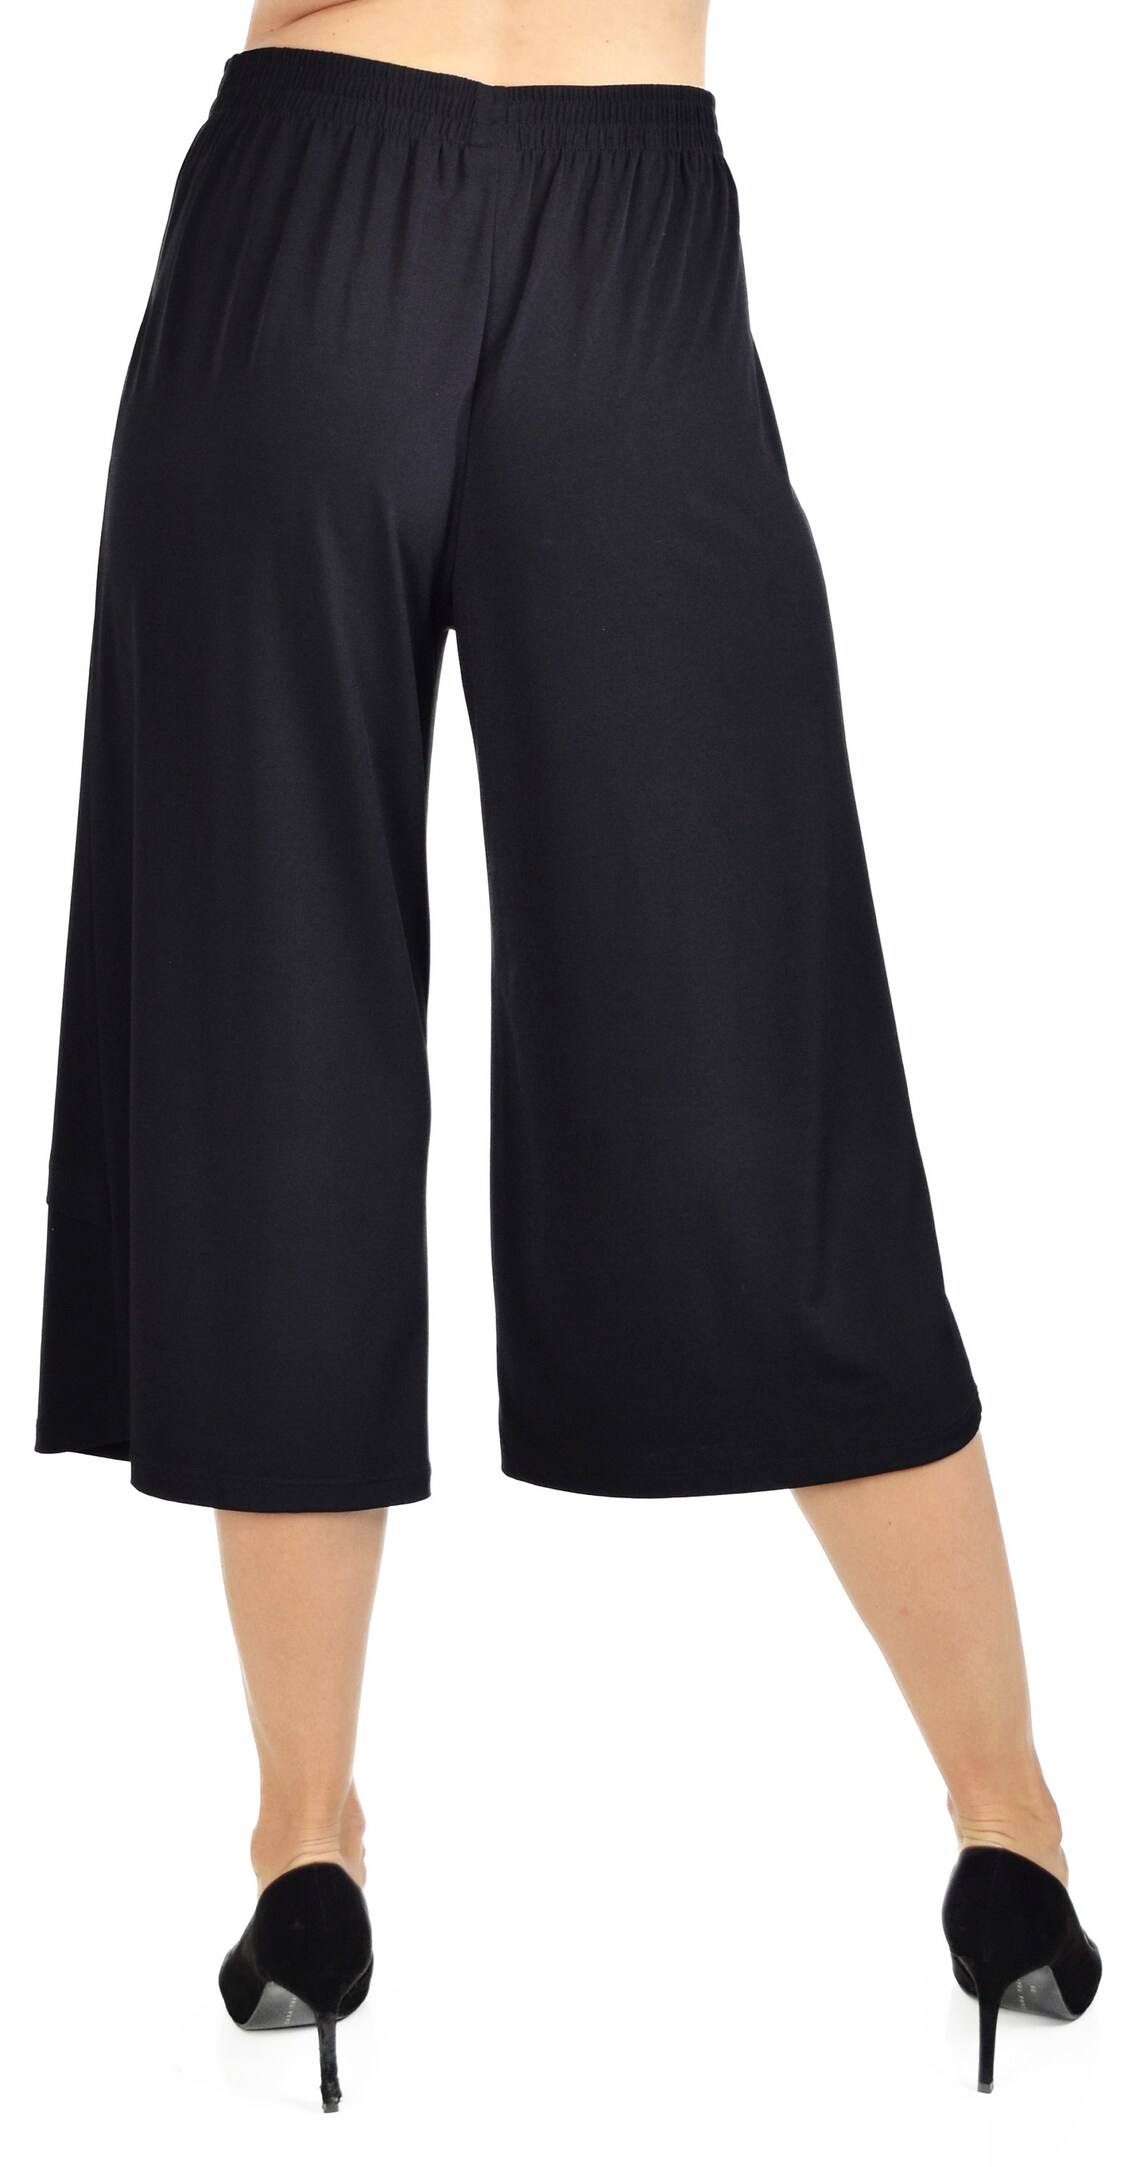 New Designer Plus Size Capri Pants with side pockets. | Etsy